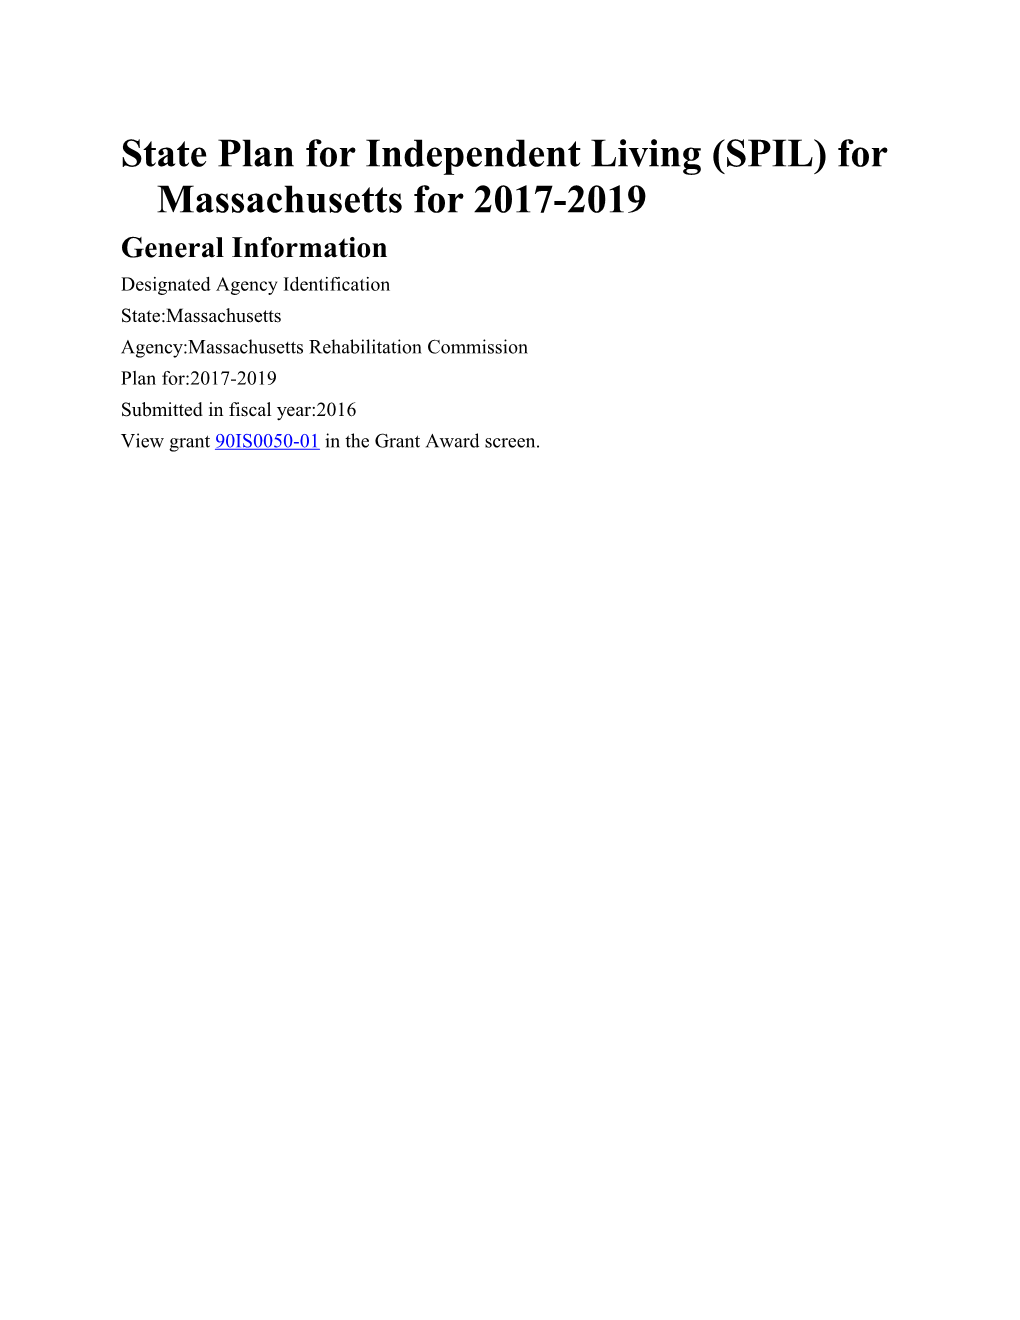 State Plan for Independent Living (SPIL) for Massachusetts for 2017-2019